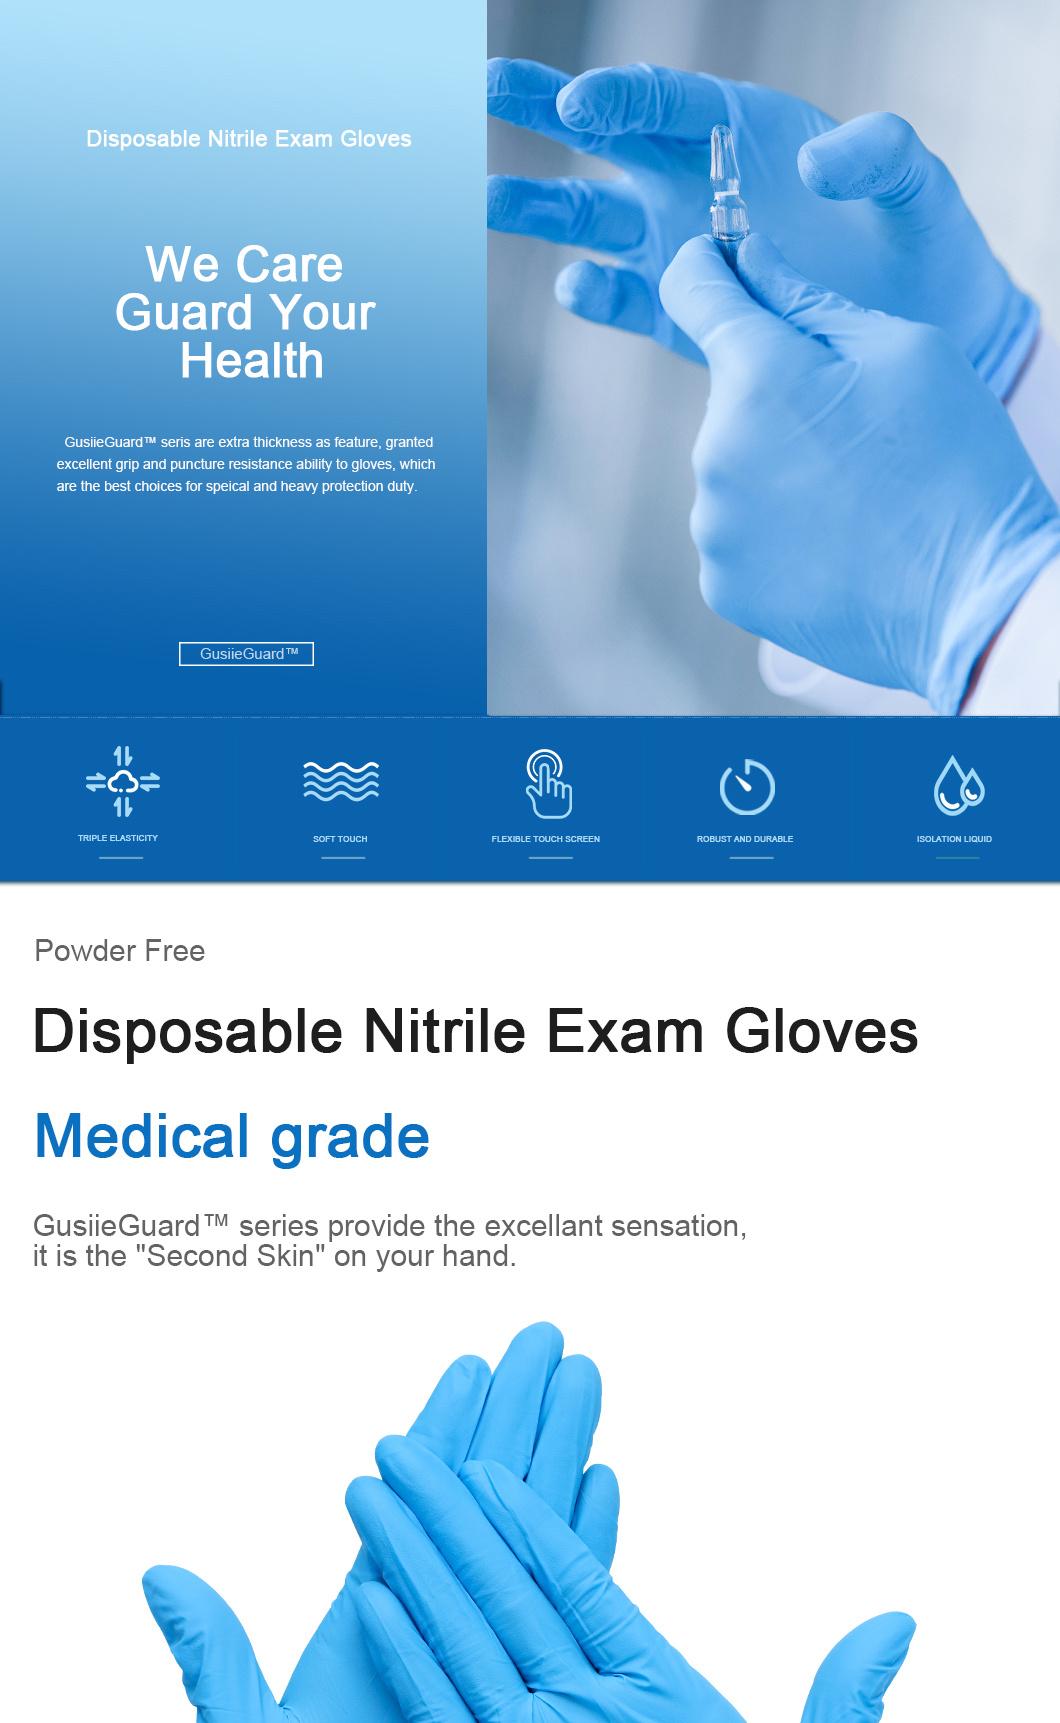 FDA Standard Disposable Powder Free Black Nitrile Medical Examination Glove